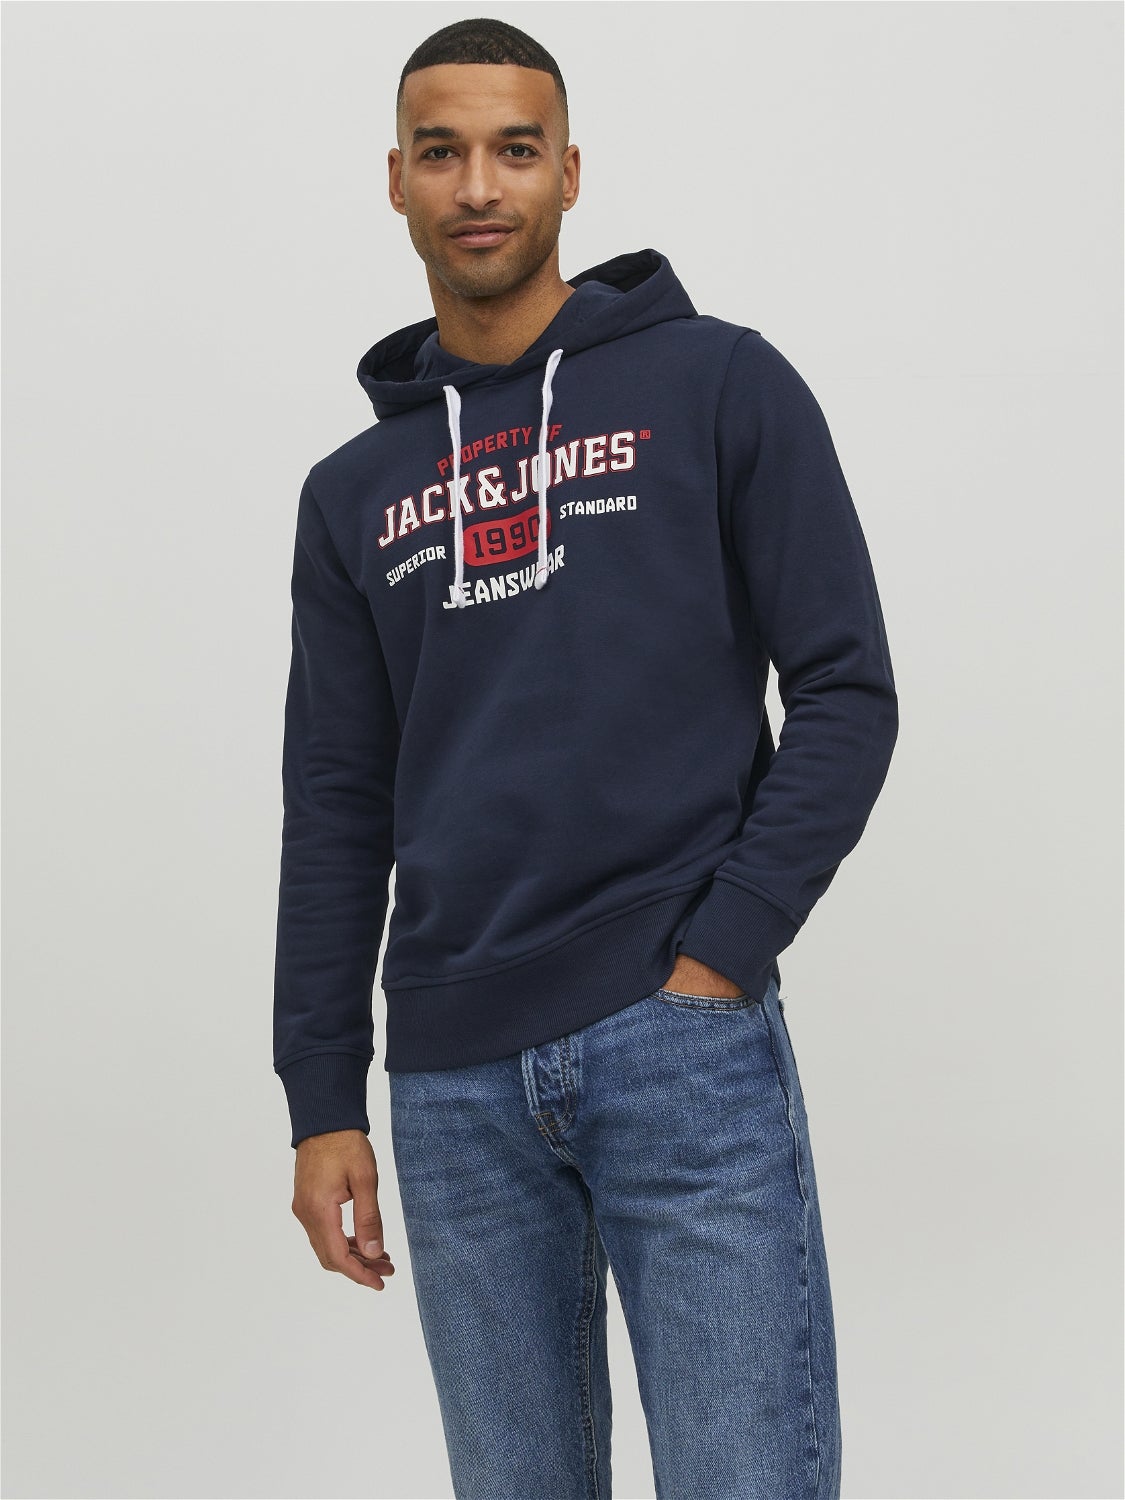 Jack & Jones jumper discount 56% Blue L MEN FASHION Jumpers & Sweatshirts Elegant 